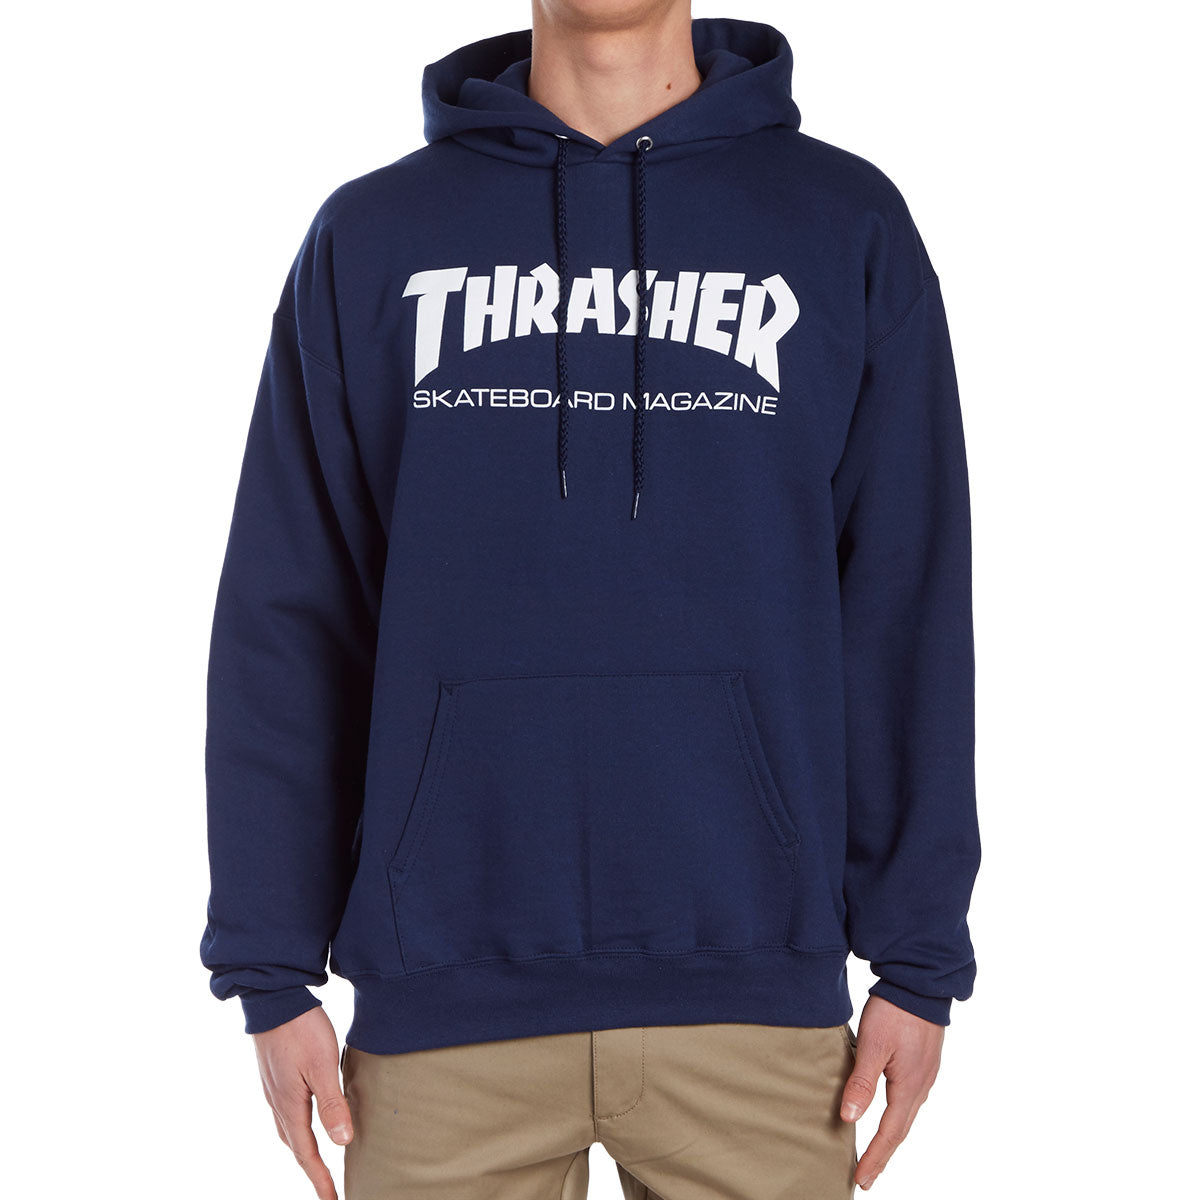 Thrasher Skate Mag Hoodie - Navy image 1